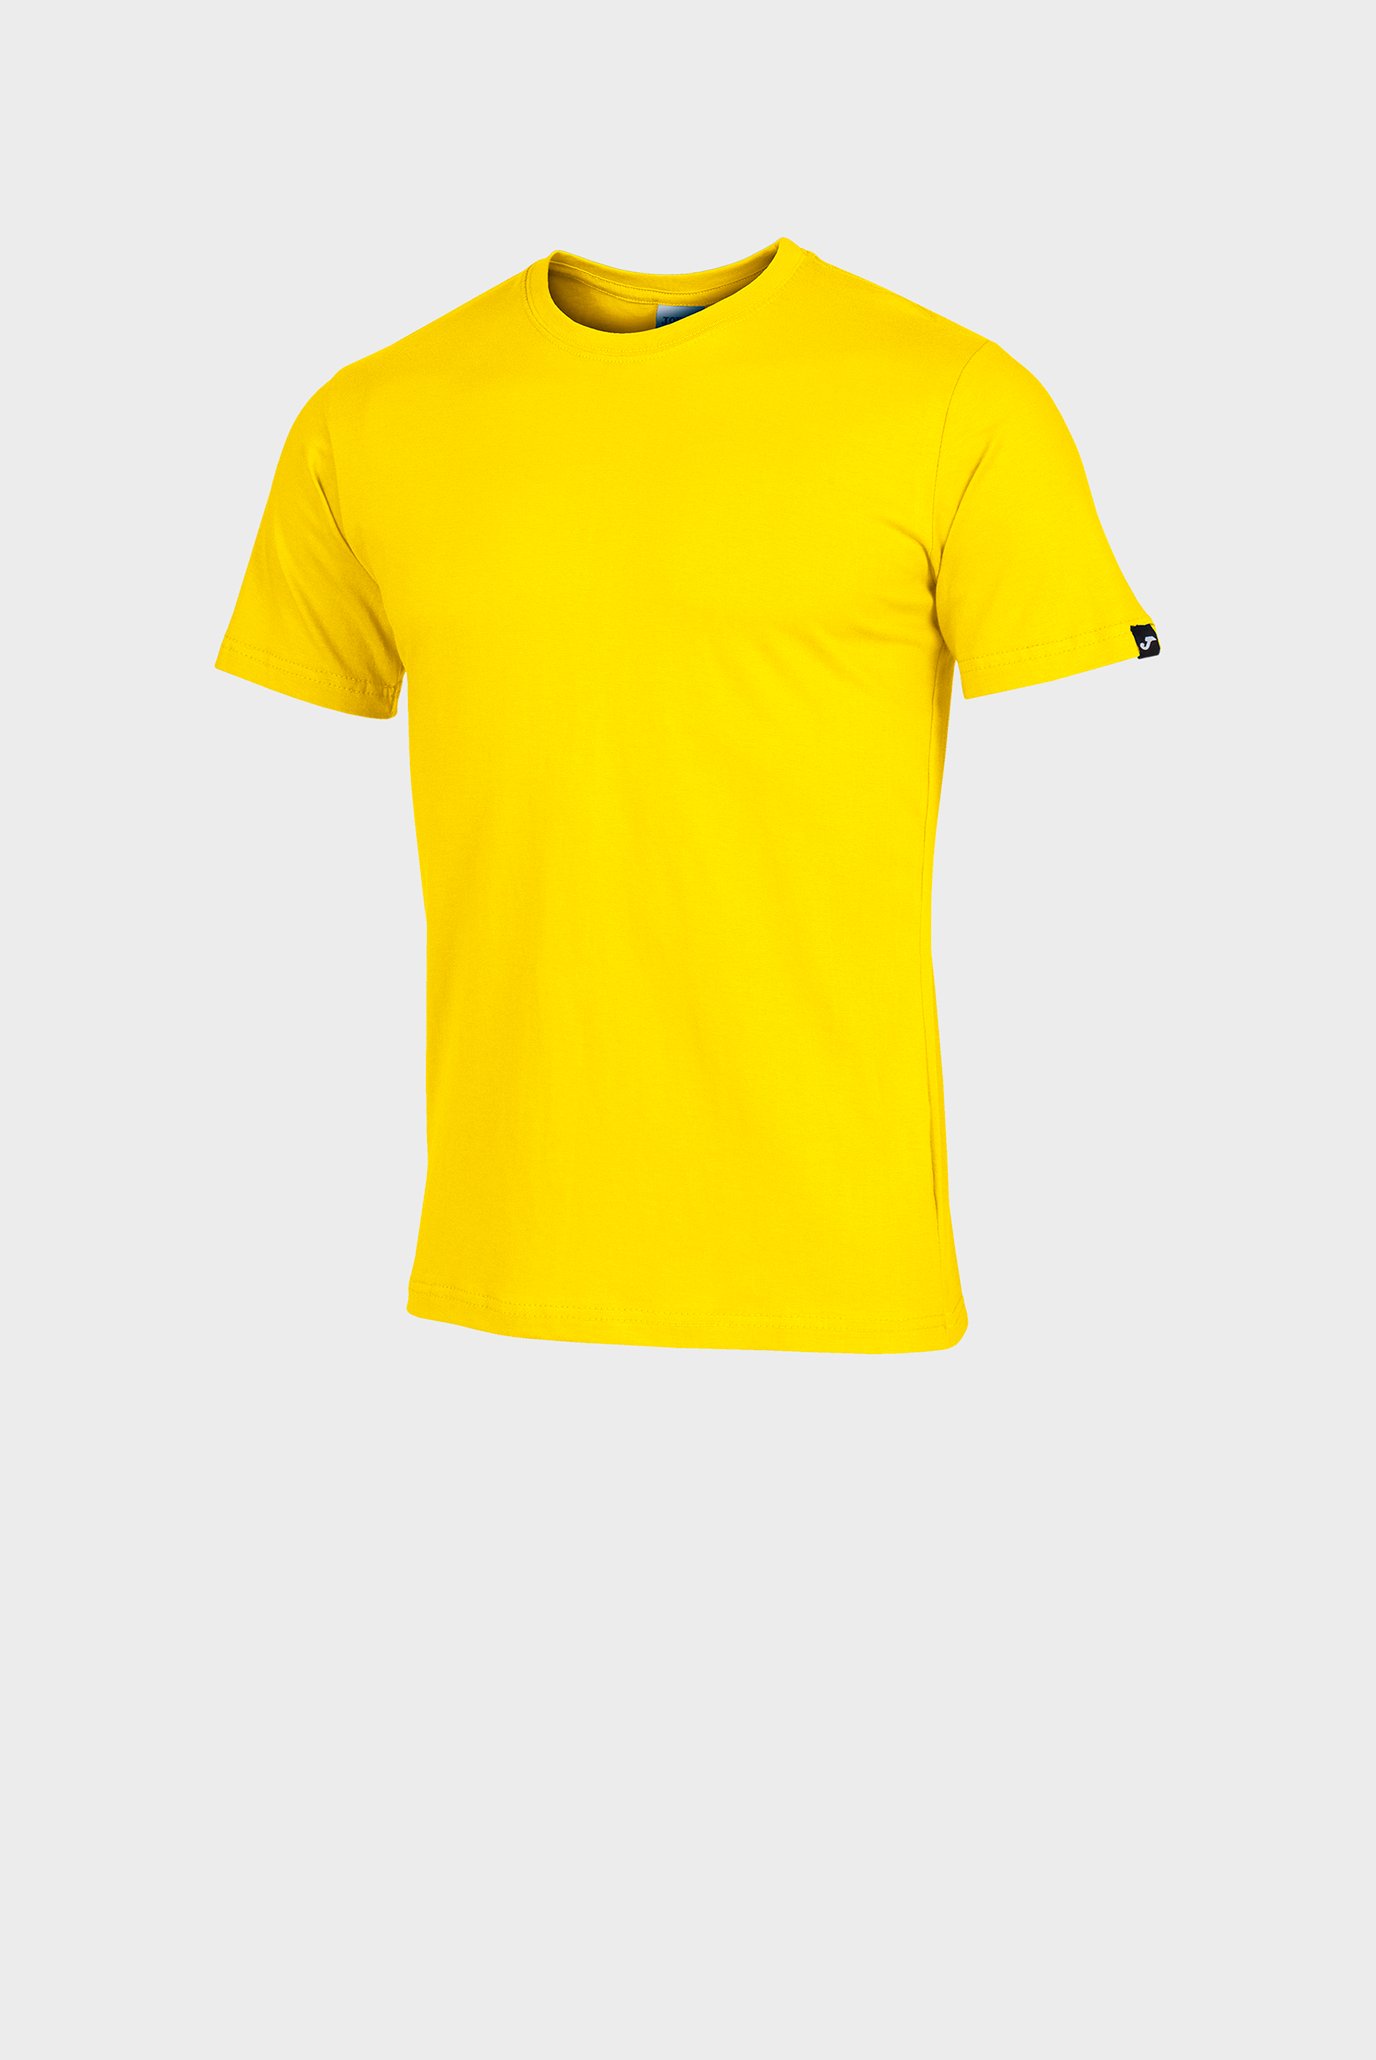 Дитяча жовта футболка 1